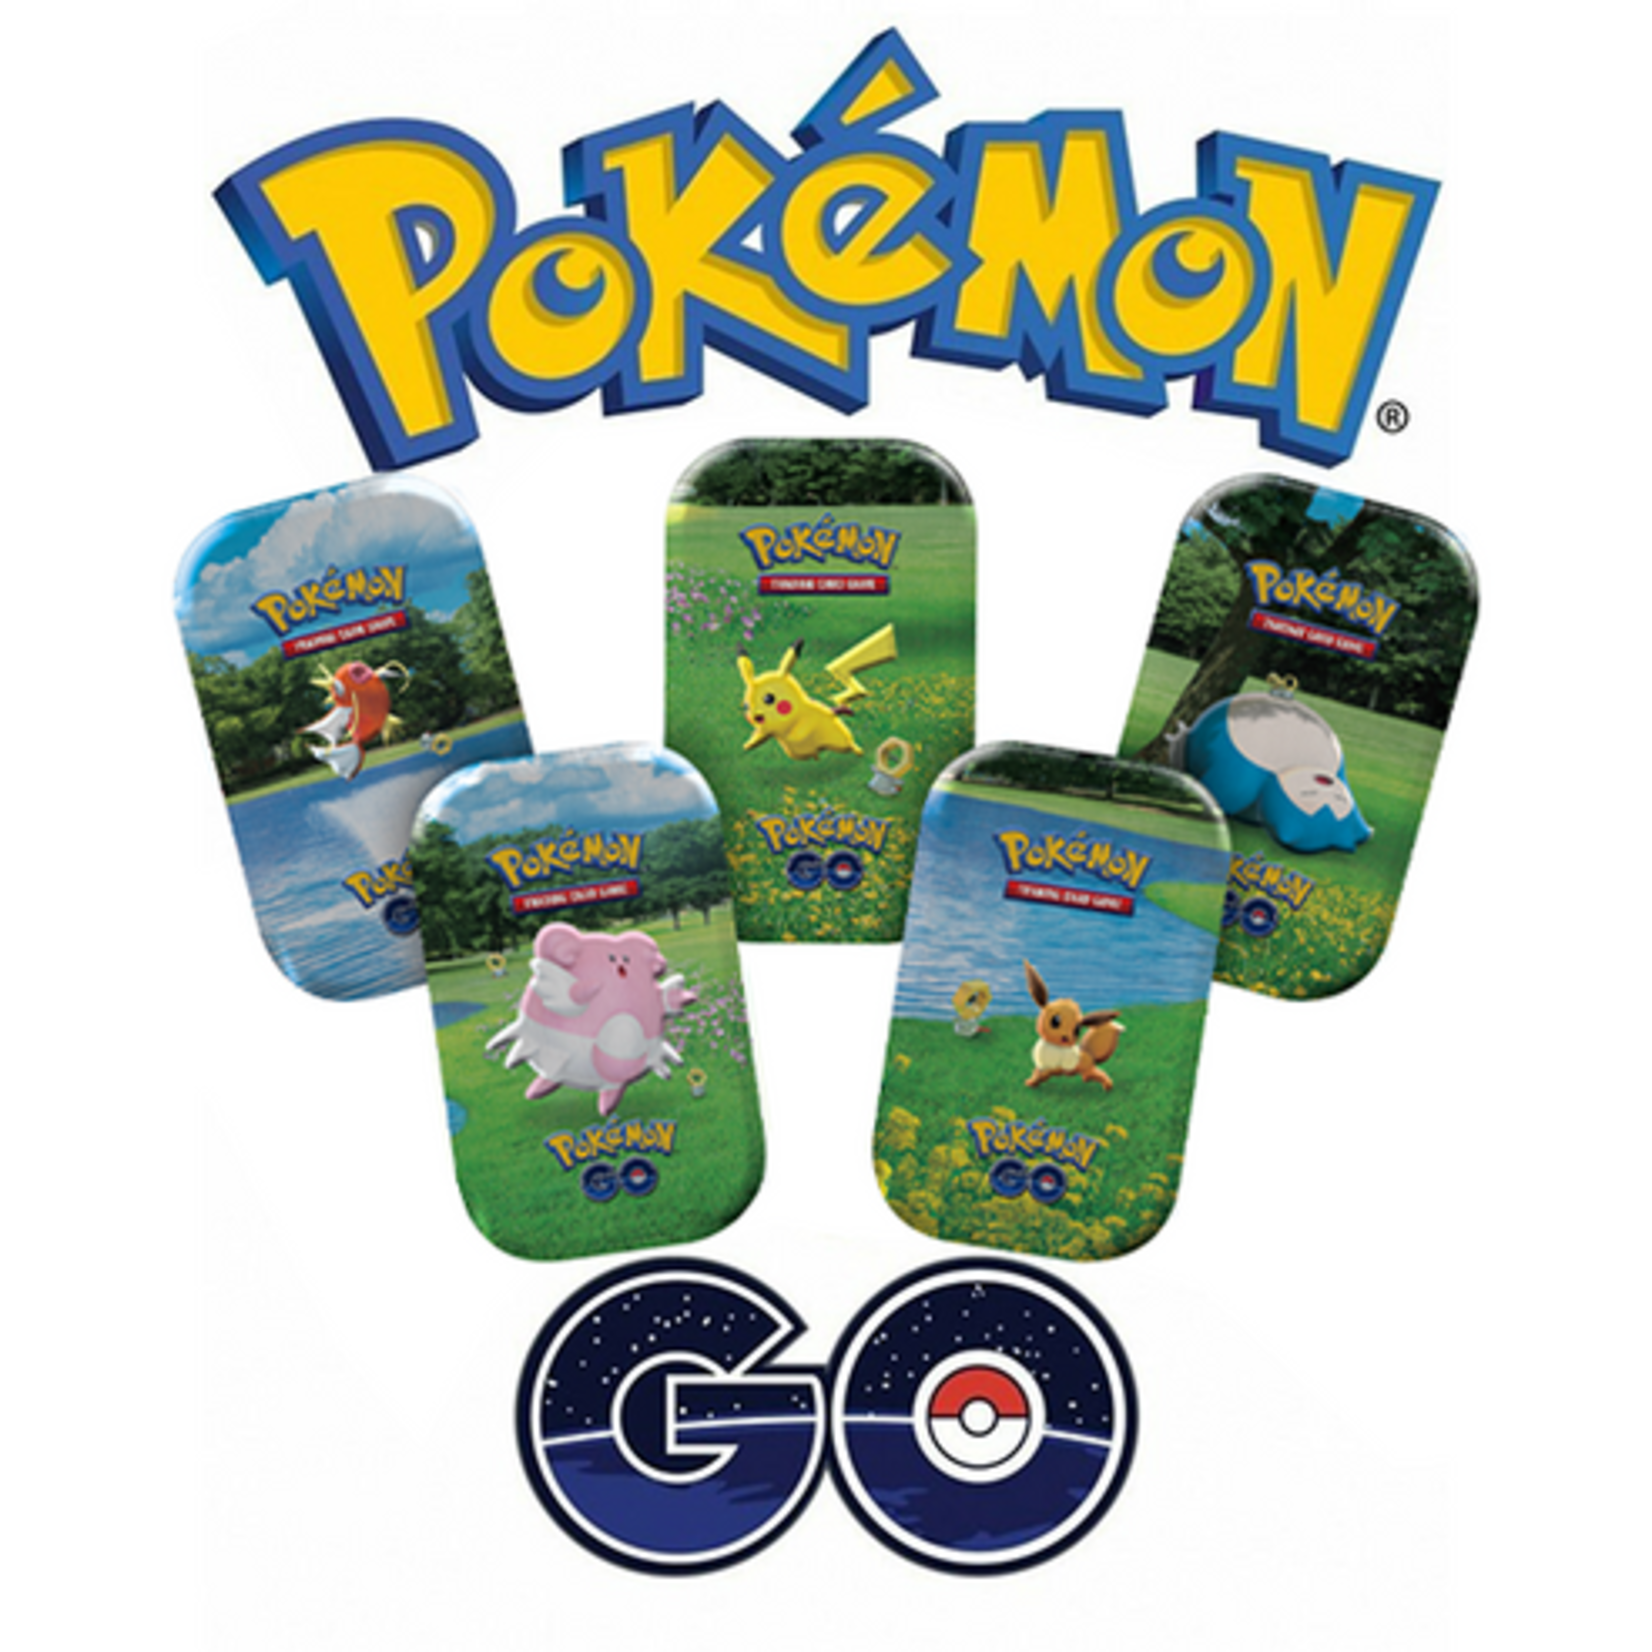 Pokémon Pokémon TCG: Pokémon GO Mini Tins Display